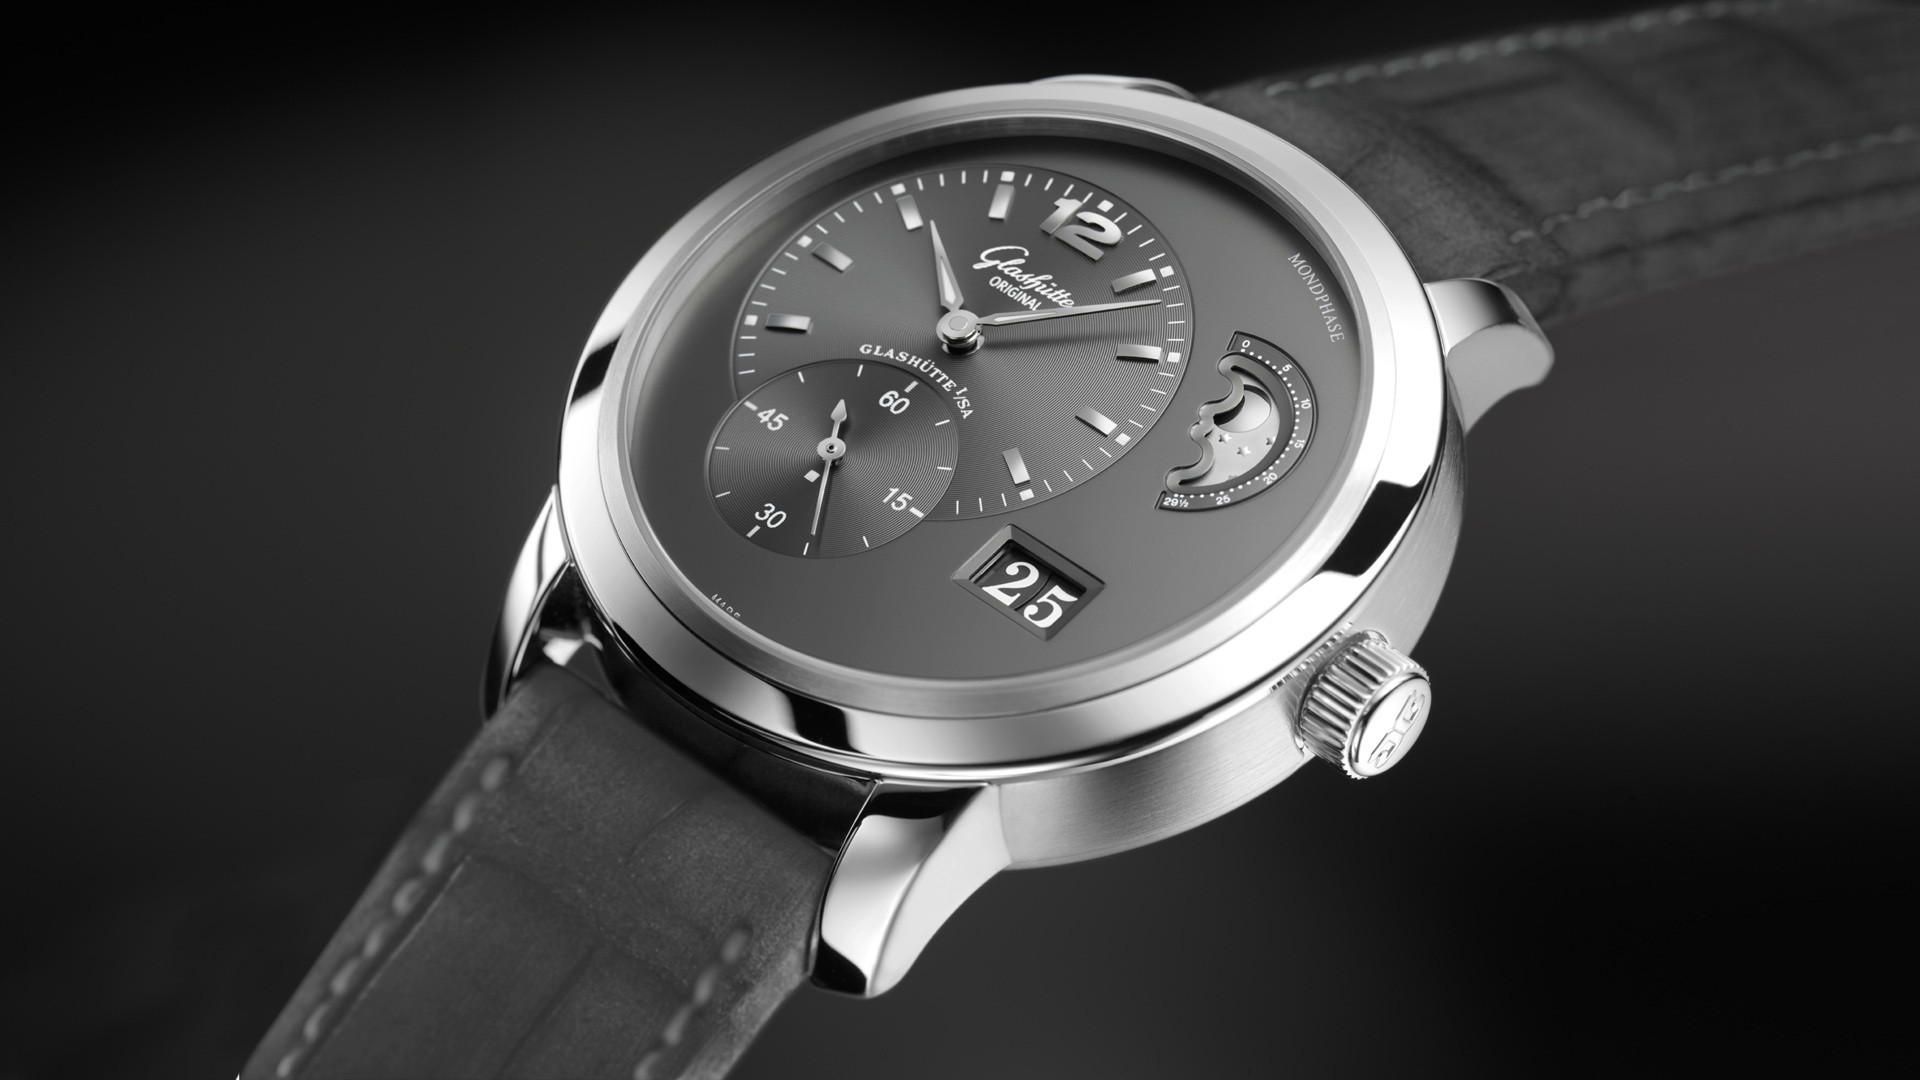 General 1920x1080 watch luxury watches Glashütte wristwatch monochrome numbers technology